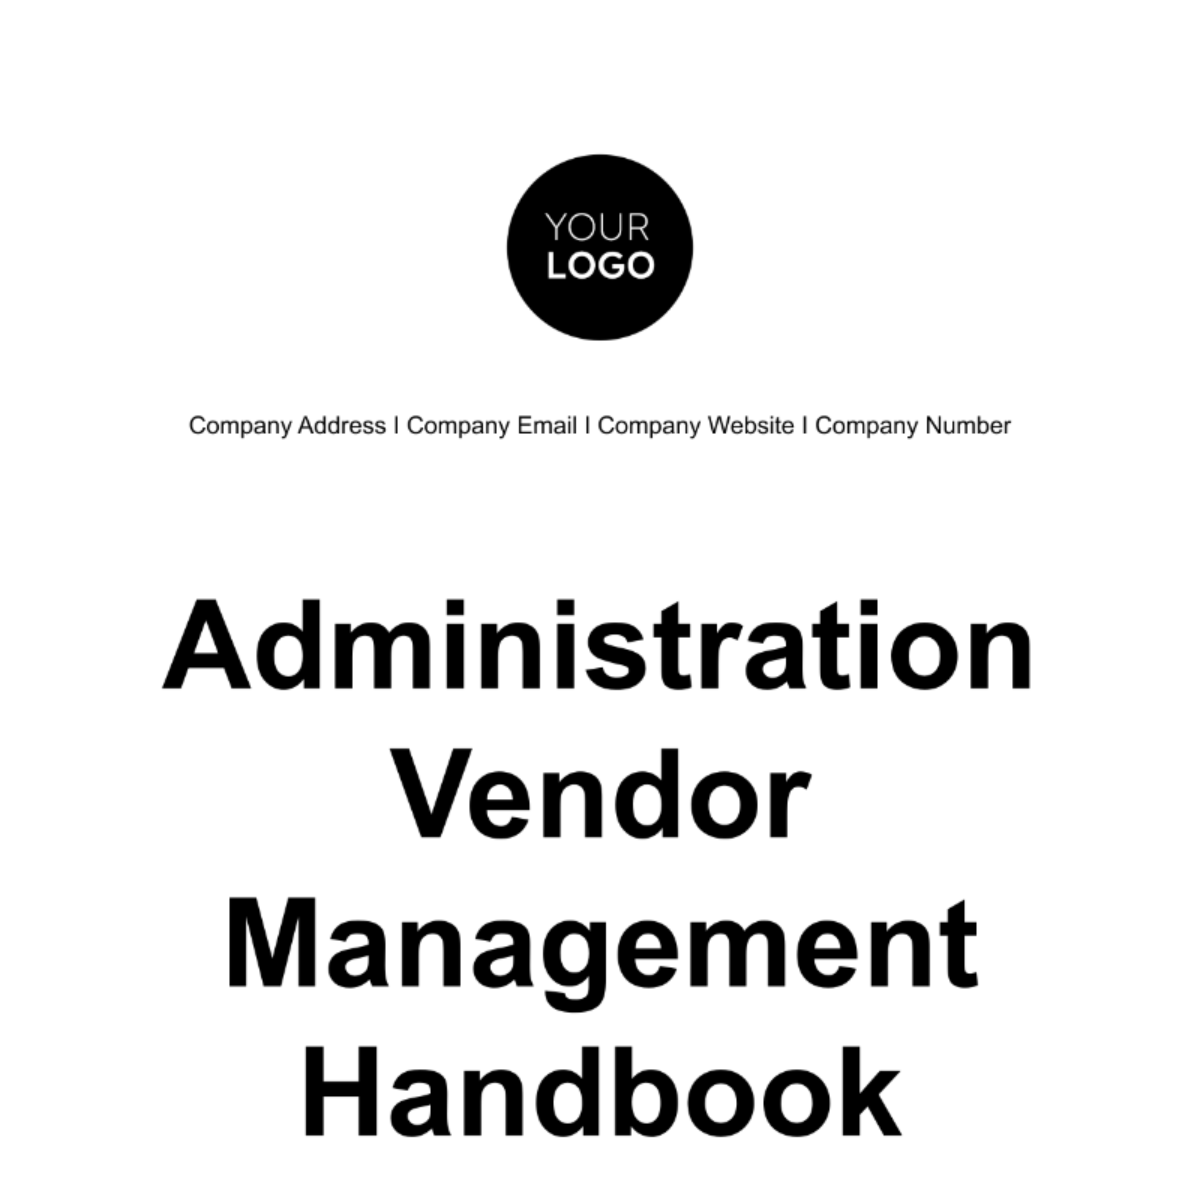 Administration Vendor Management Handbook Template